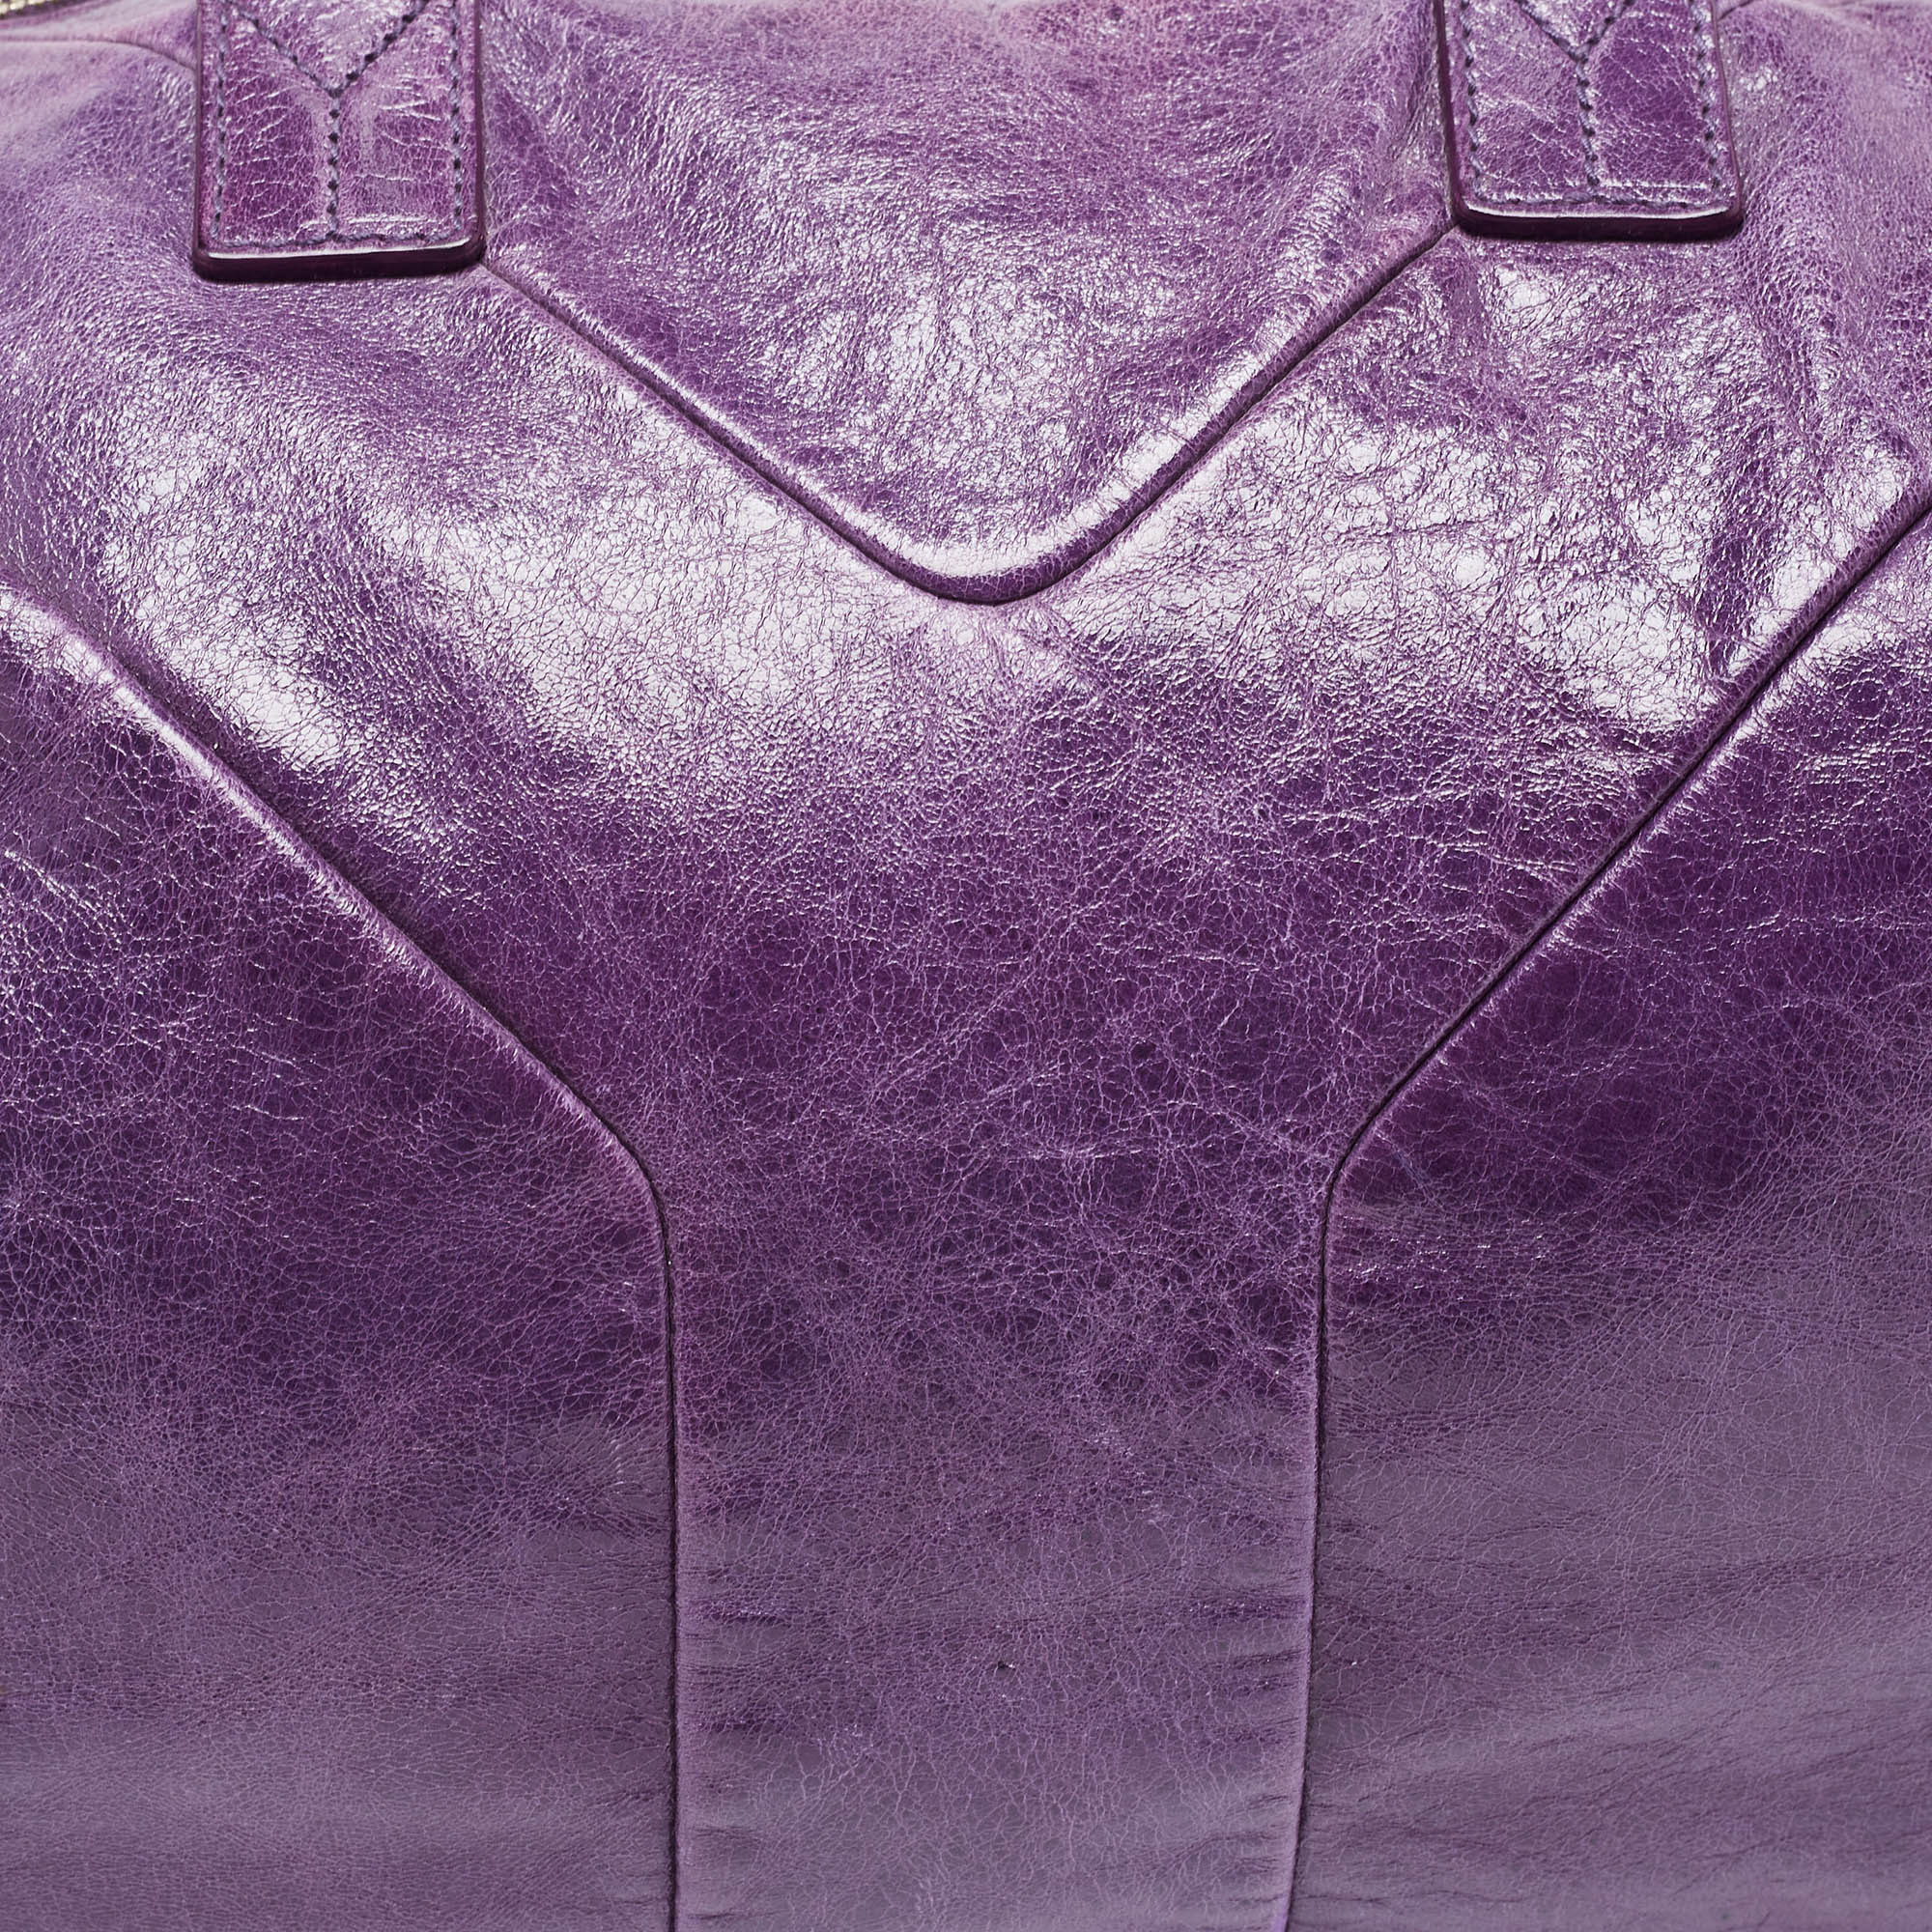 Yves Saint Laurent Purple Leather Easy Y Satchel